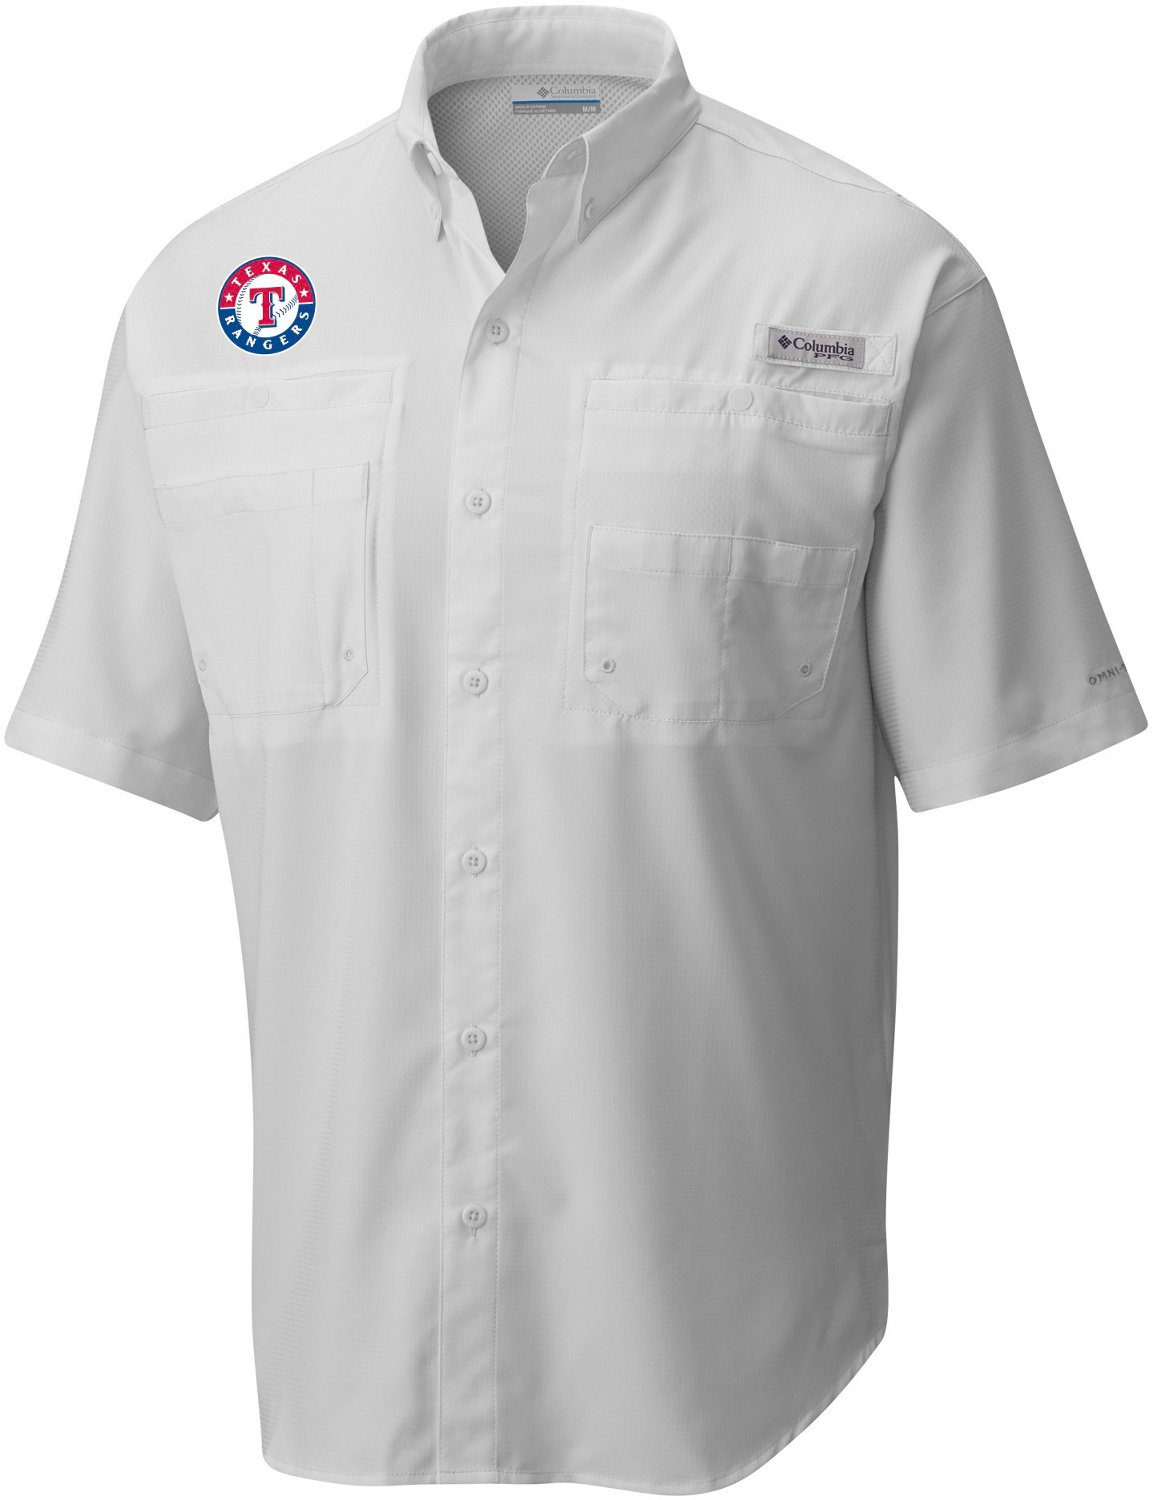 texas rangers columbia shirt